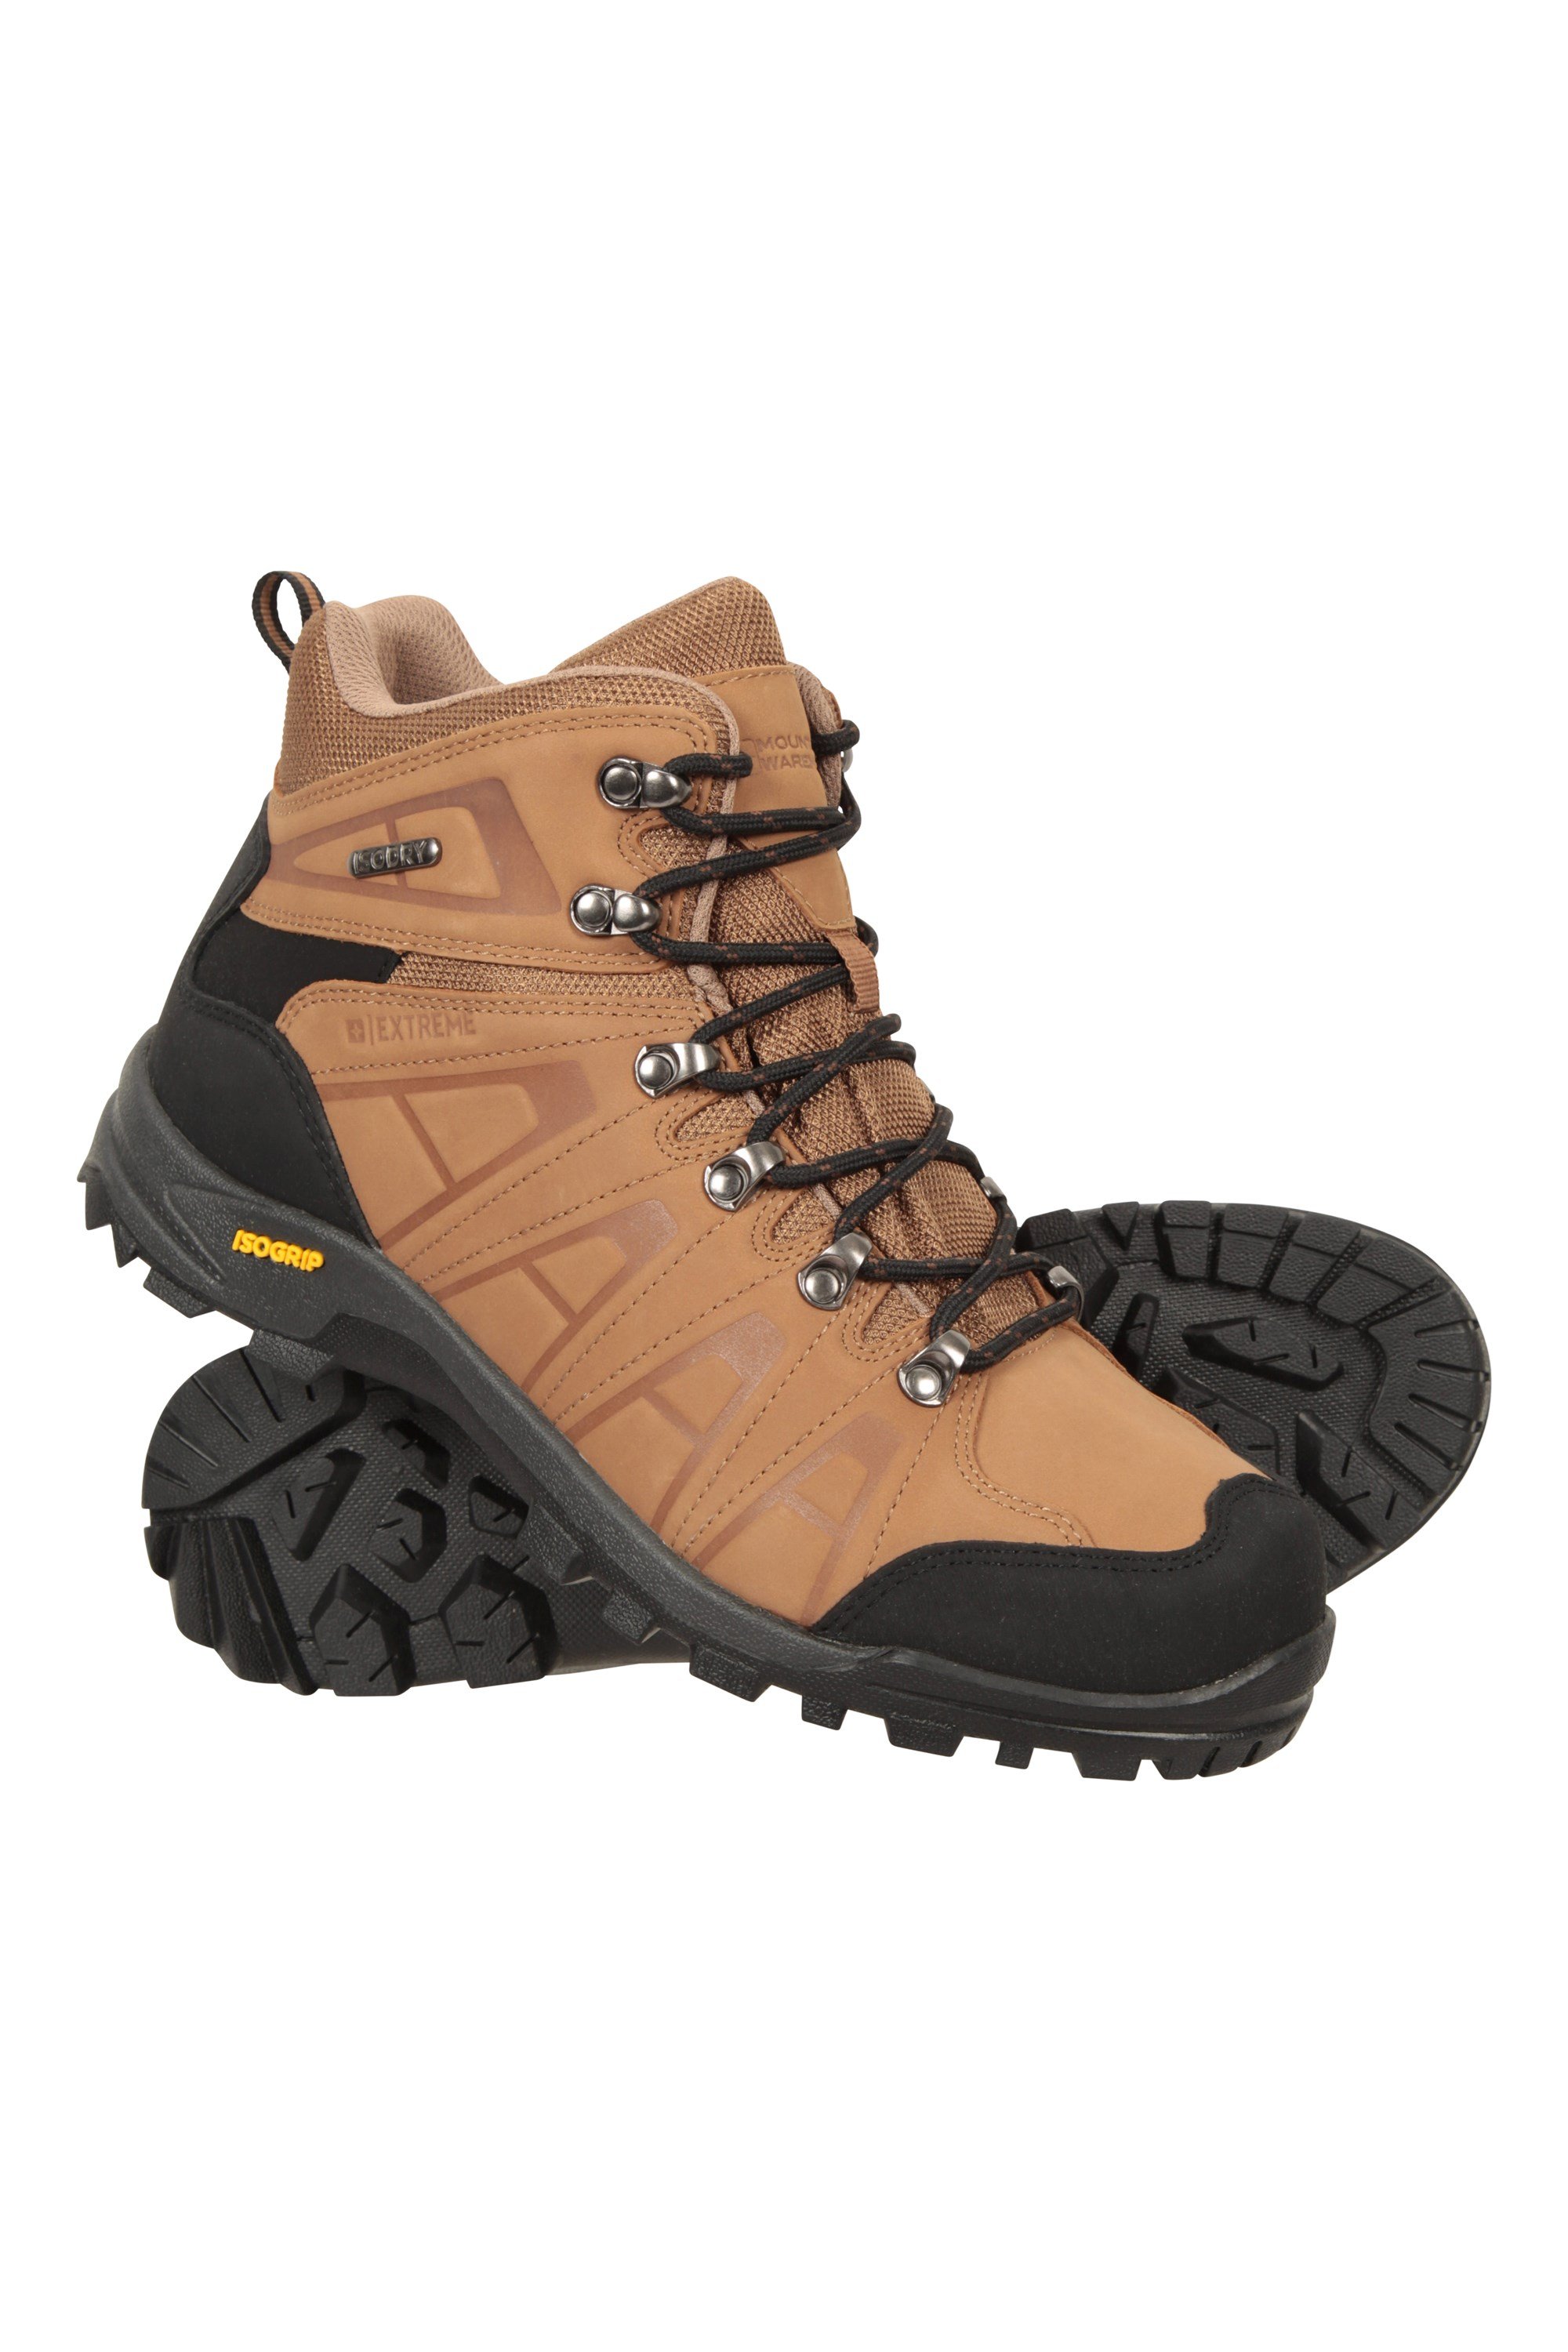 Mountain Warehouse Mountain Warehouse Extreme Men's Leather Waterproof Boots BROWN UK 7/ EU 41 